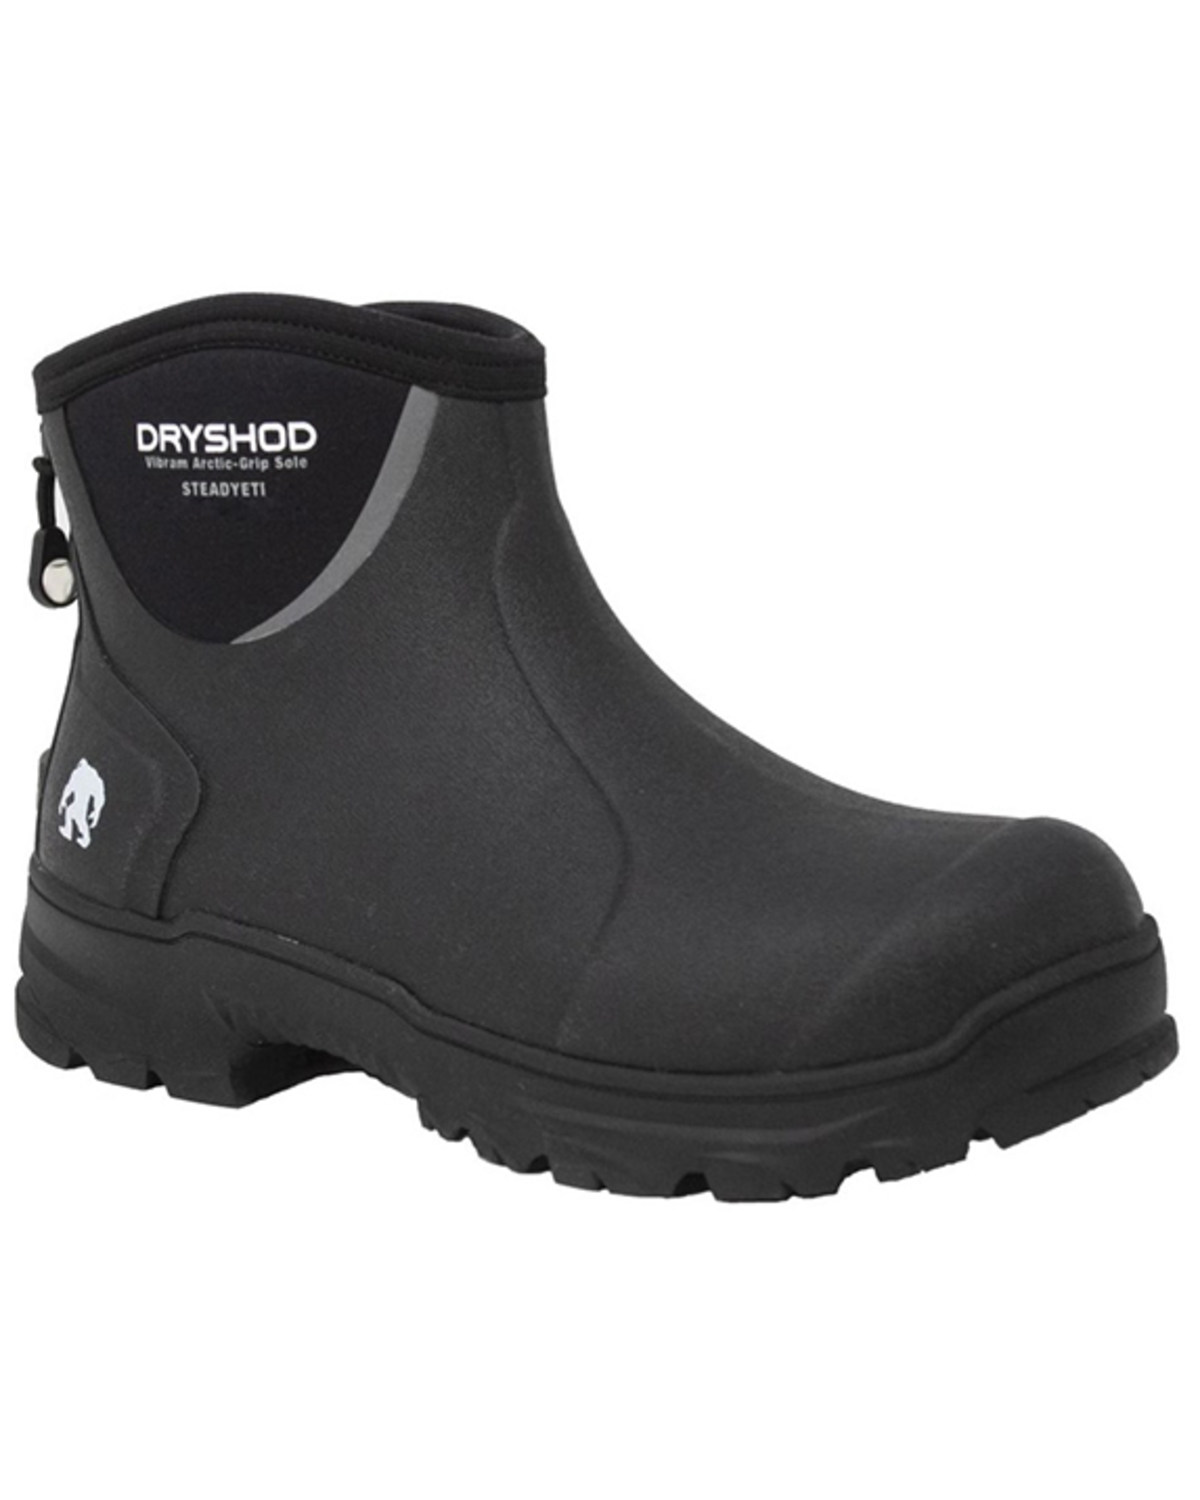 Dryshod Men's Steadyeti Vibram Arctic Grip Waterproof Ankle Boots - Round Toe